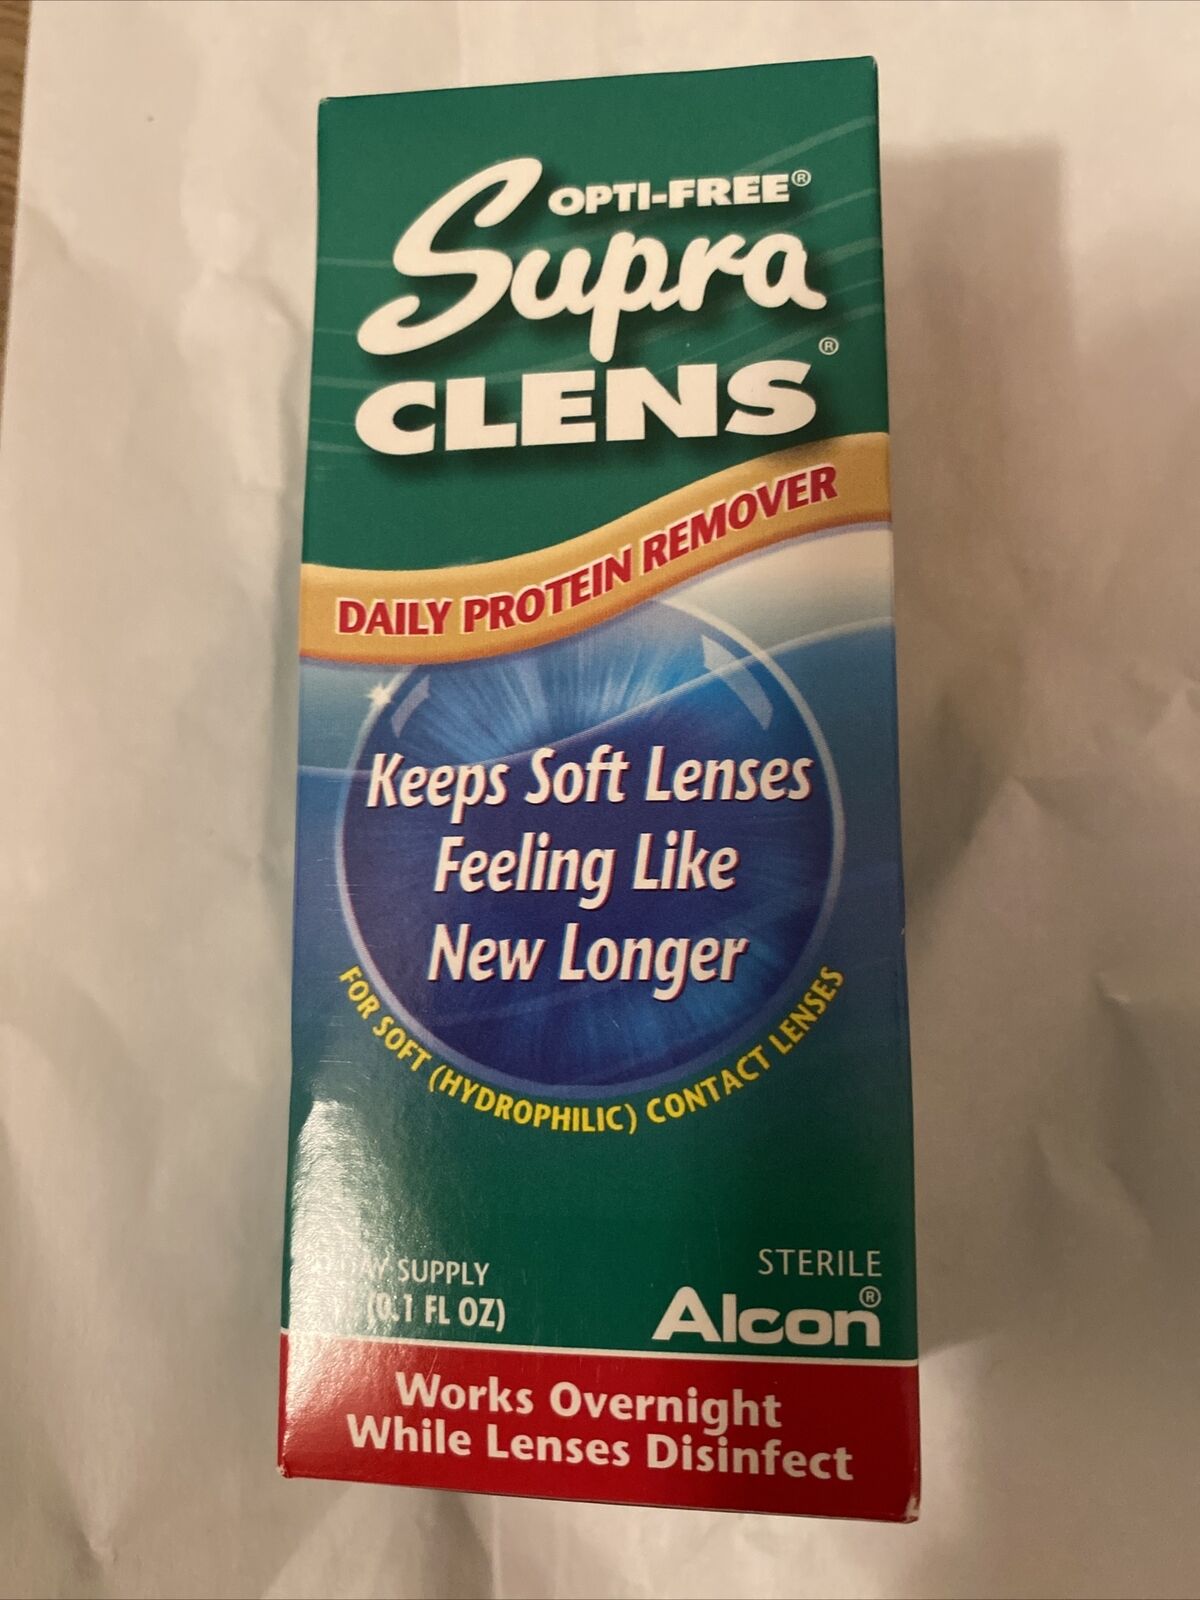 Alcon Opti-free Supra Clens Daily Protein Remover Exp 09/21 (discontinued) (1)